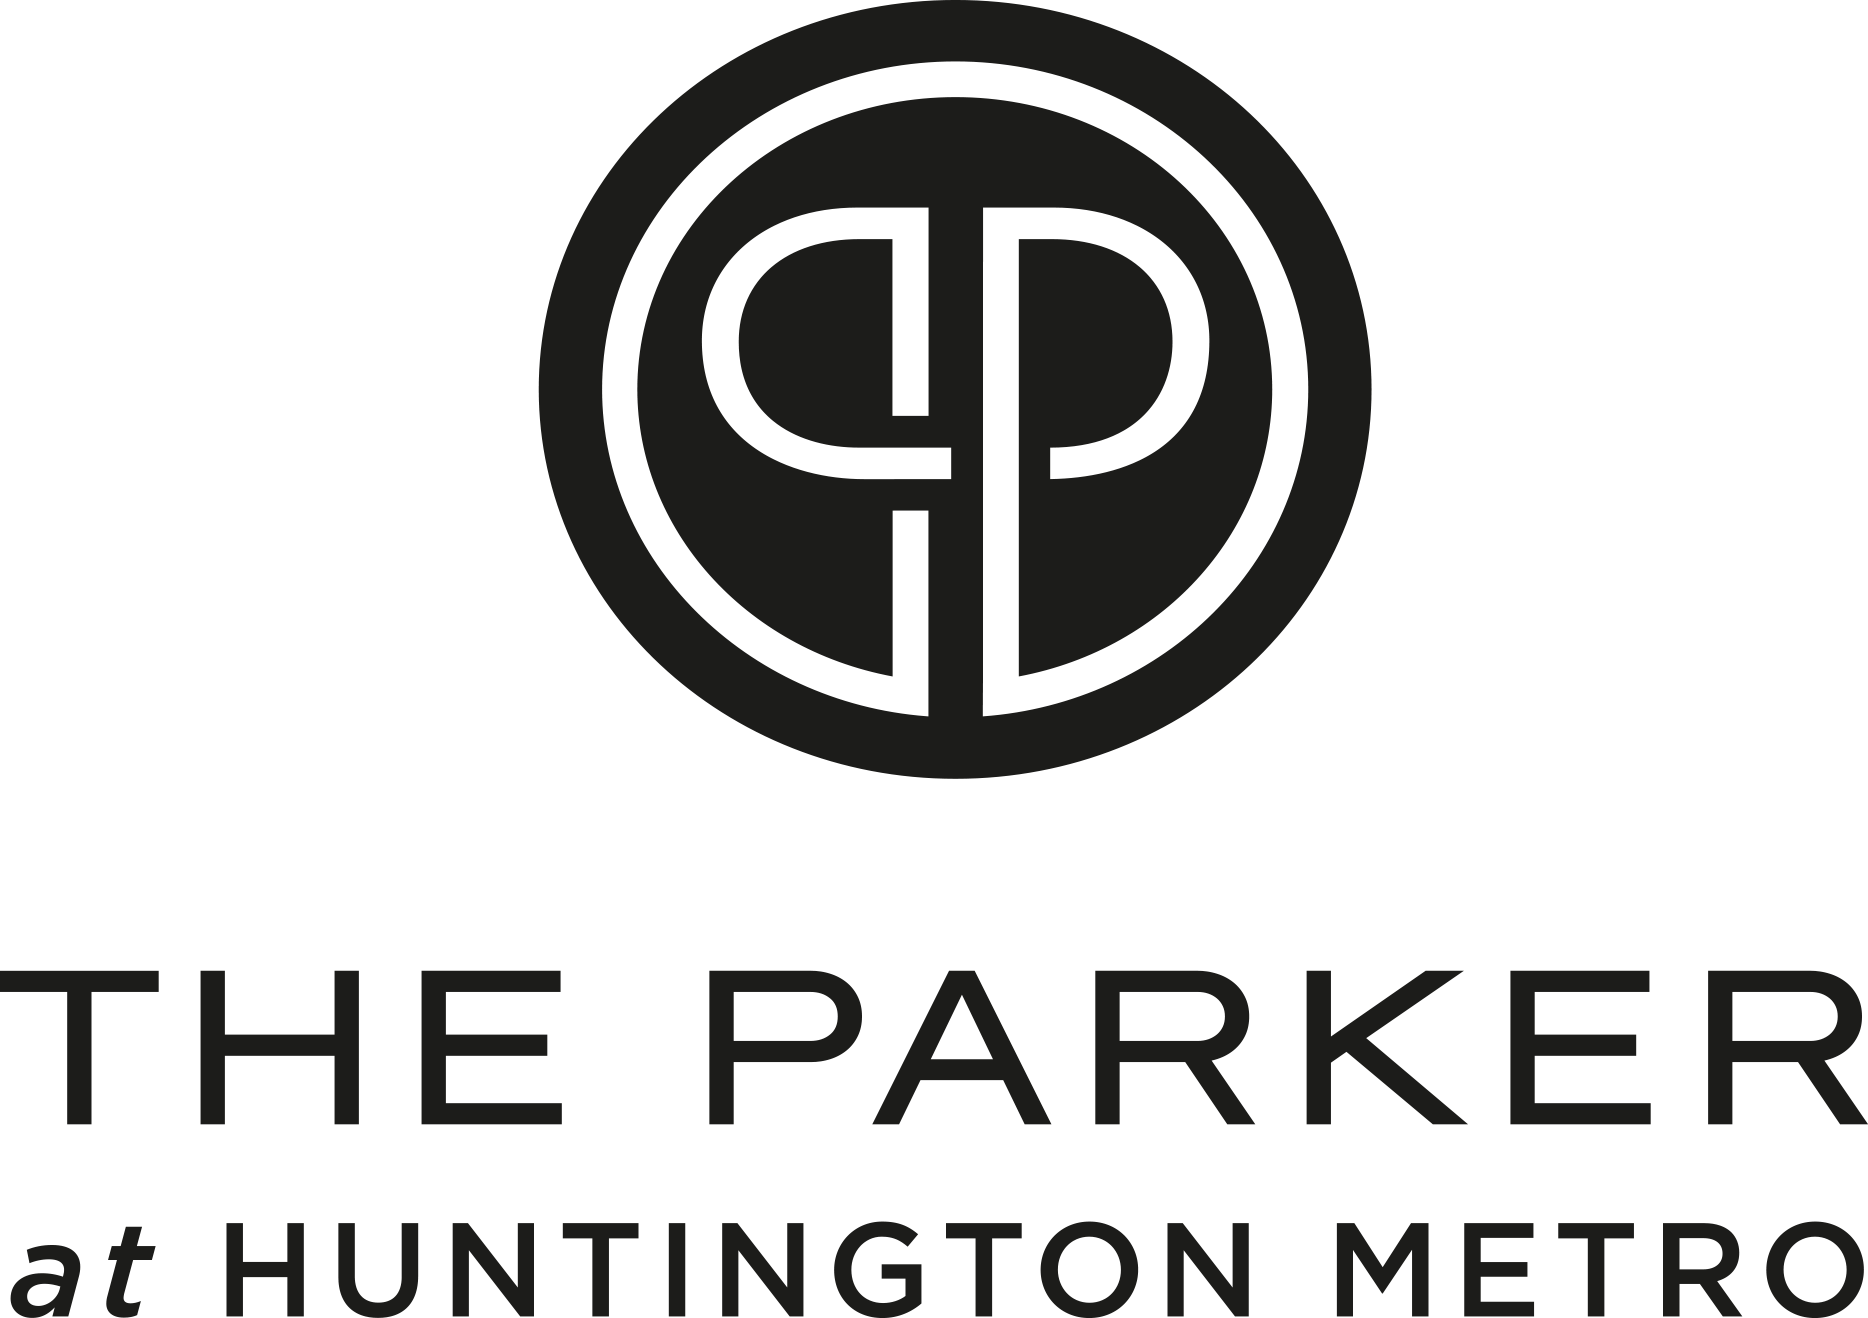 The Parker at Huntington Metro